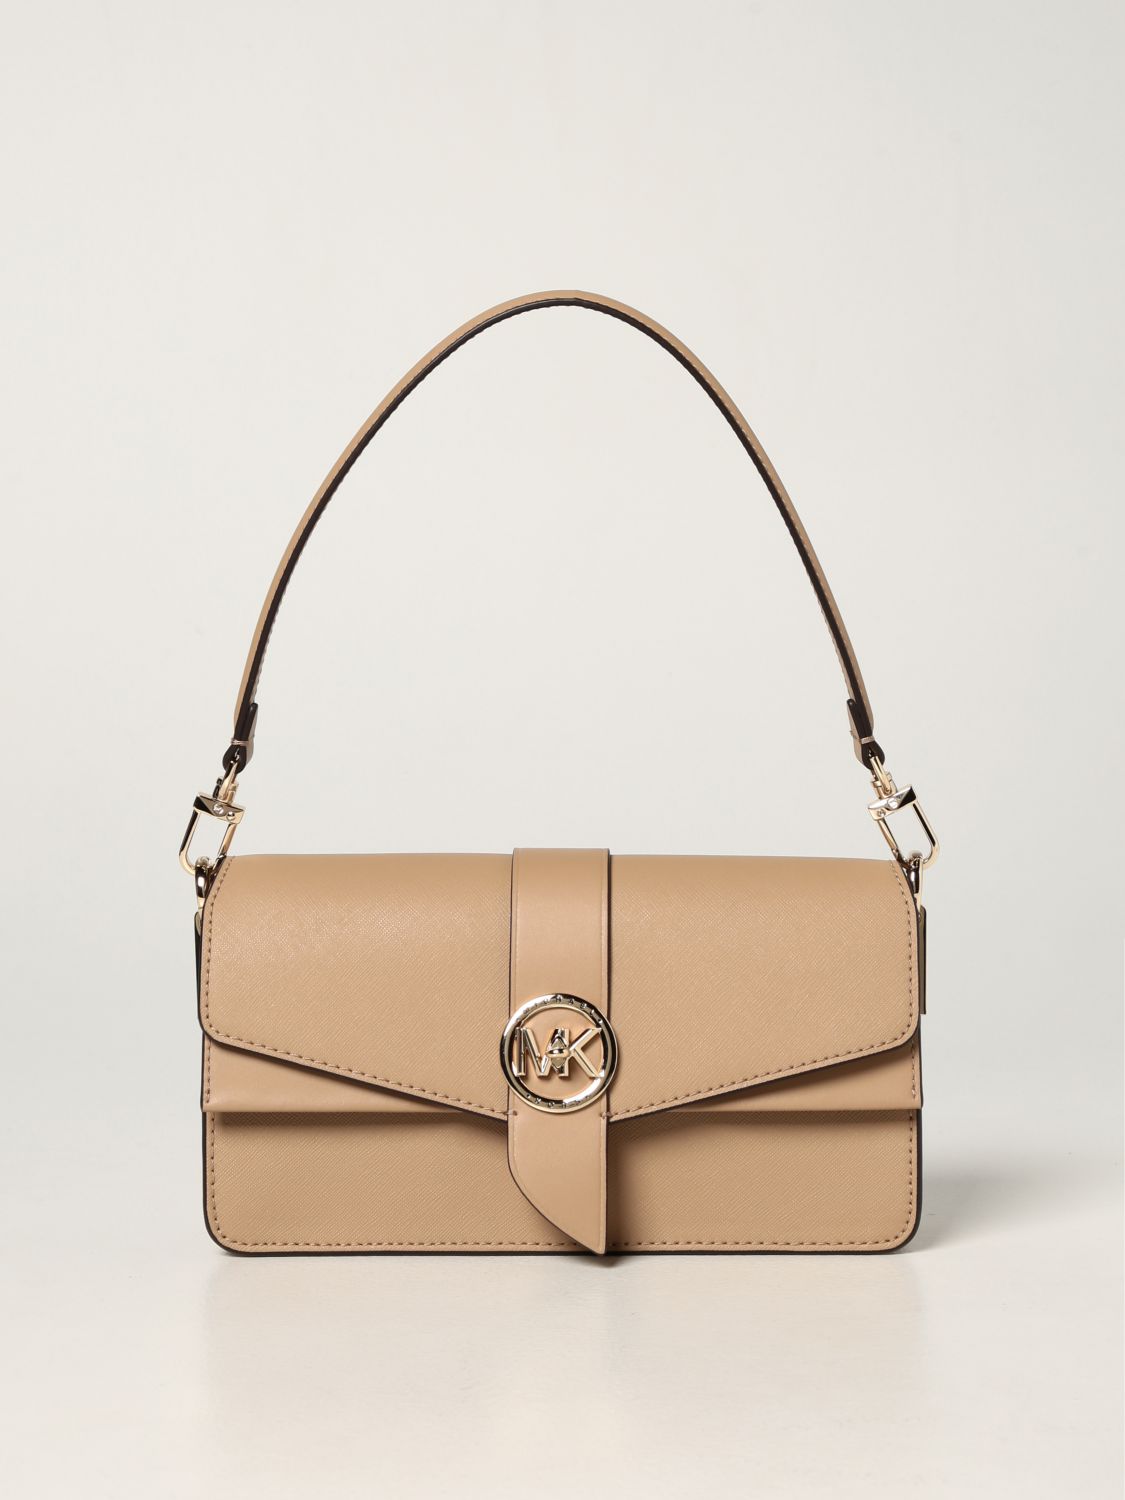 MICHAEL MICHAEL KORS: Greenwich bag in saffiano leather | Handbag Michael Michael Kors Women Beige Handbag Michael Michael Kors GIGLIO.COM